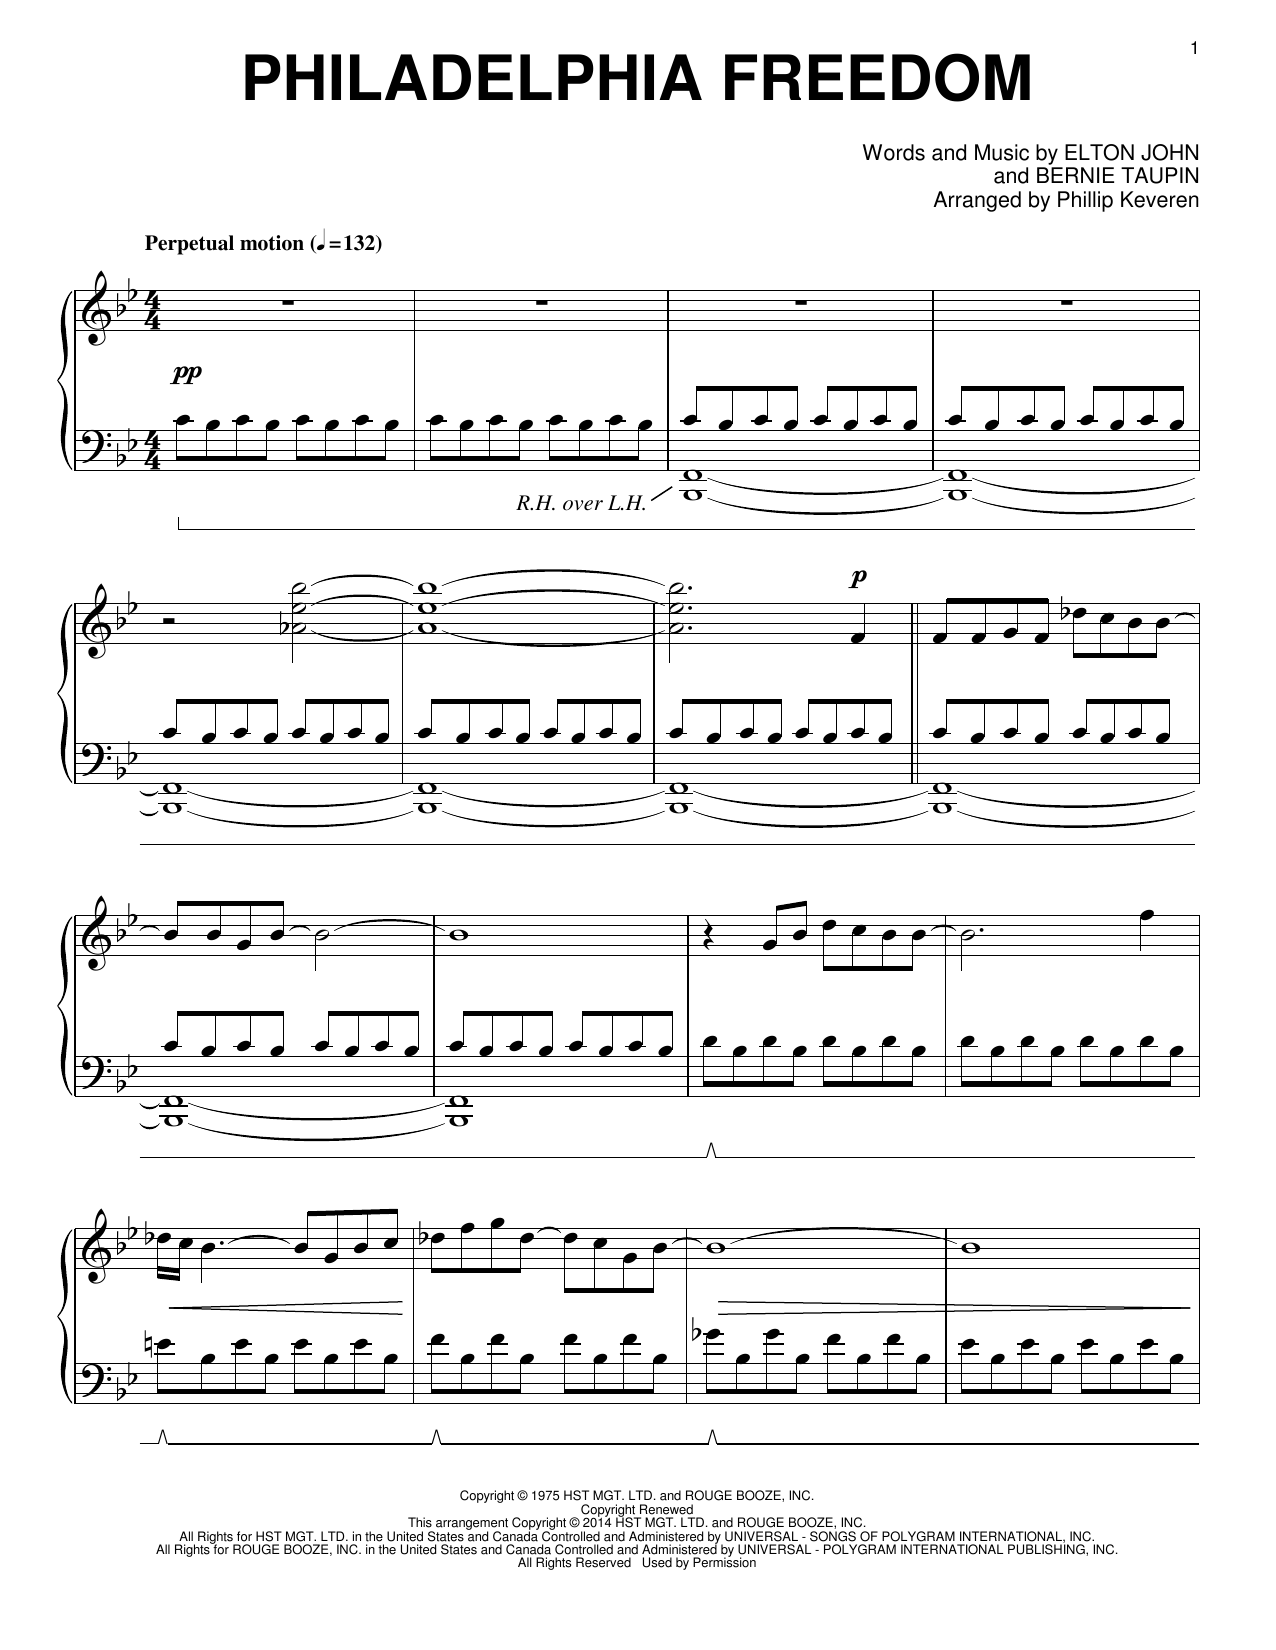 Elton John Philadelphia Freedom [Classical version] (arr. Phillip Keveren) Sheet Music Notes & Chords for Piano - Download or Print PDF